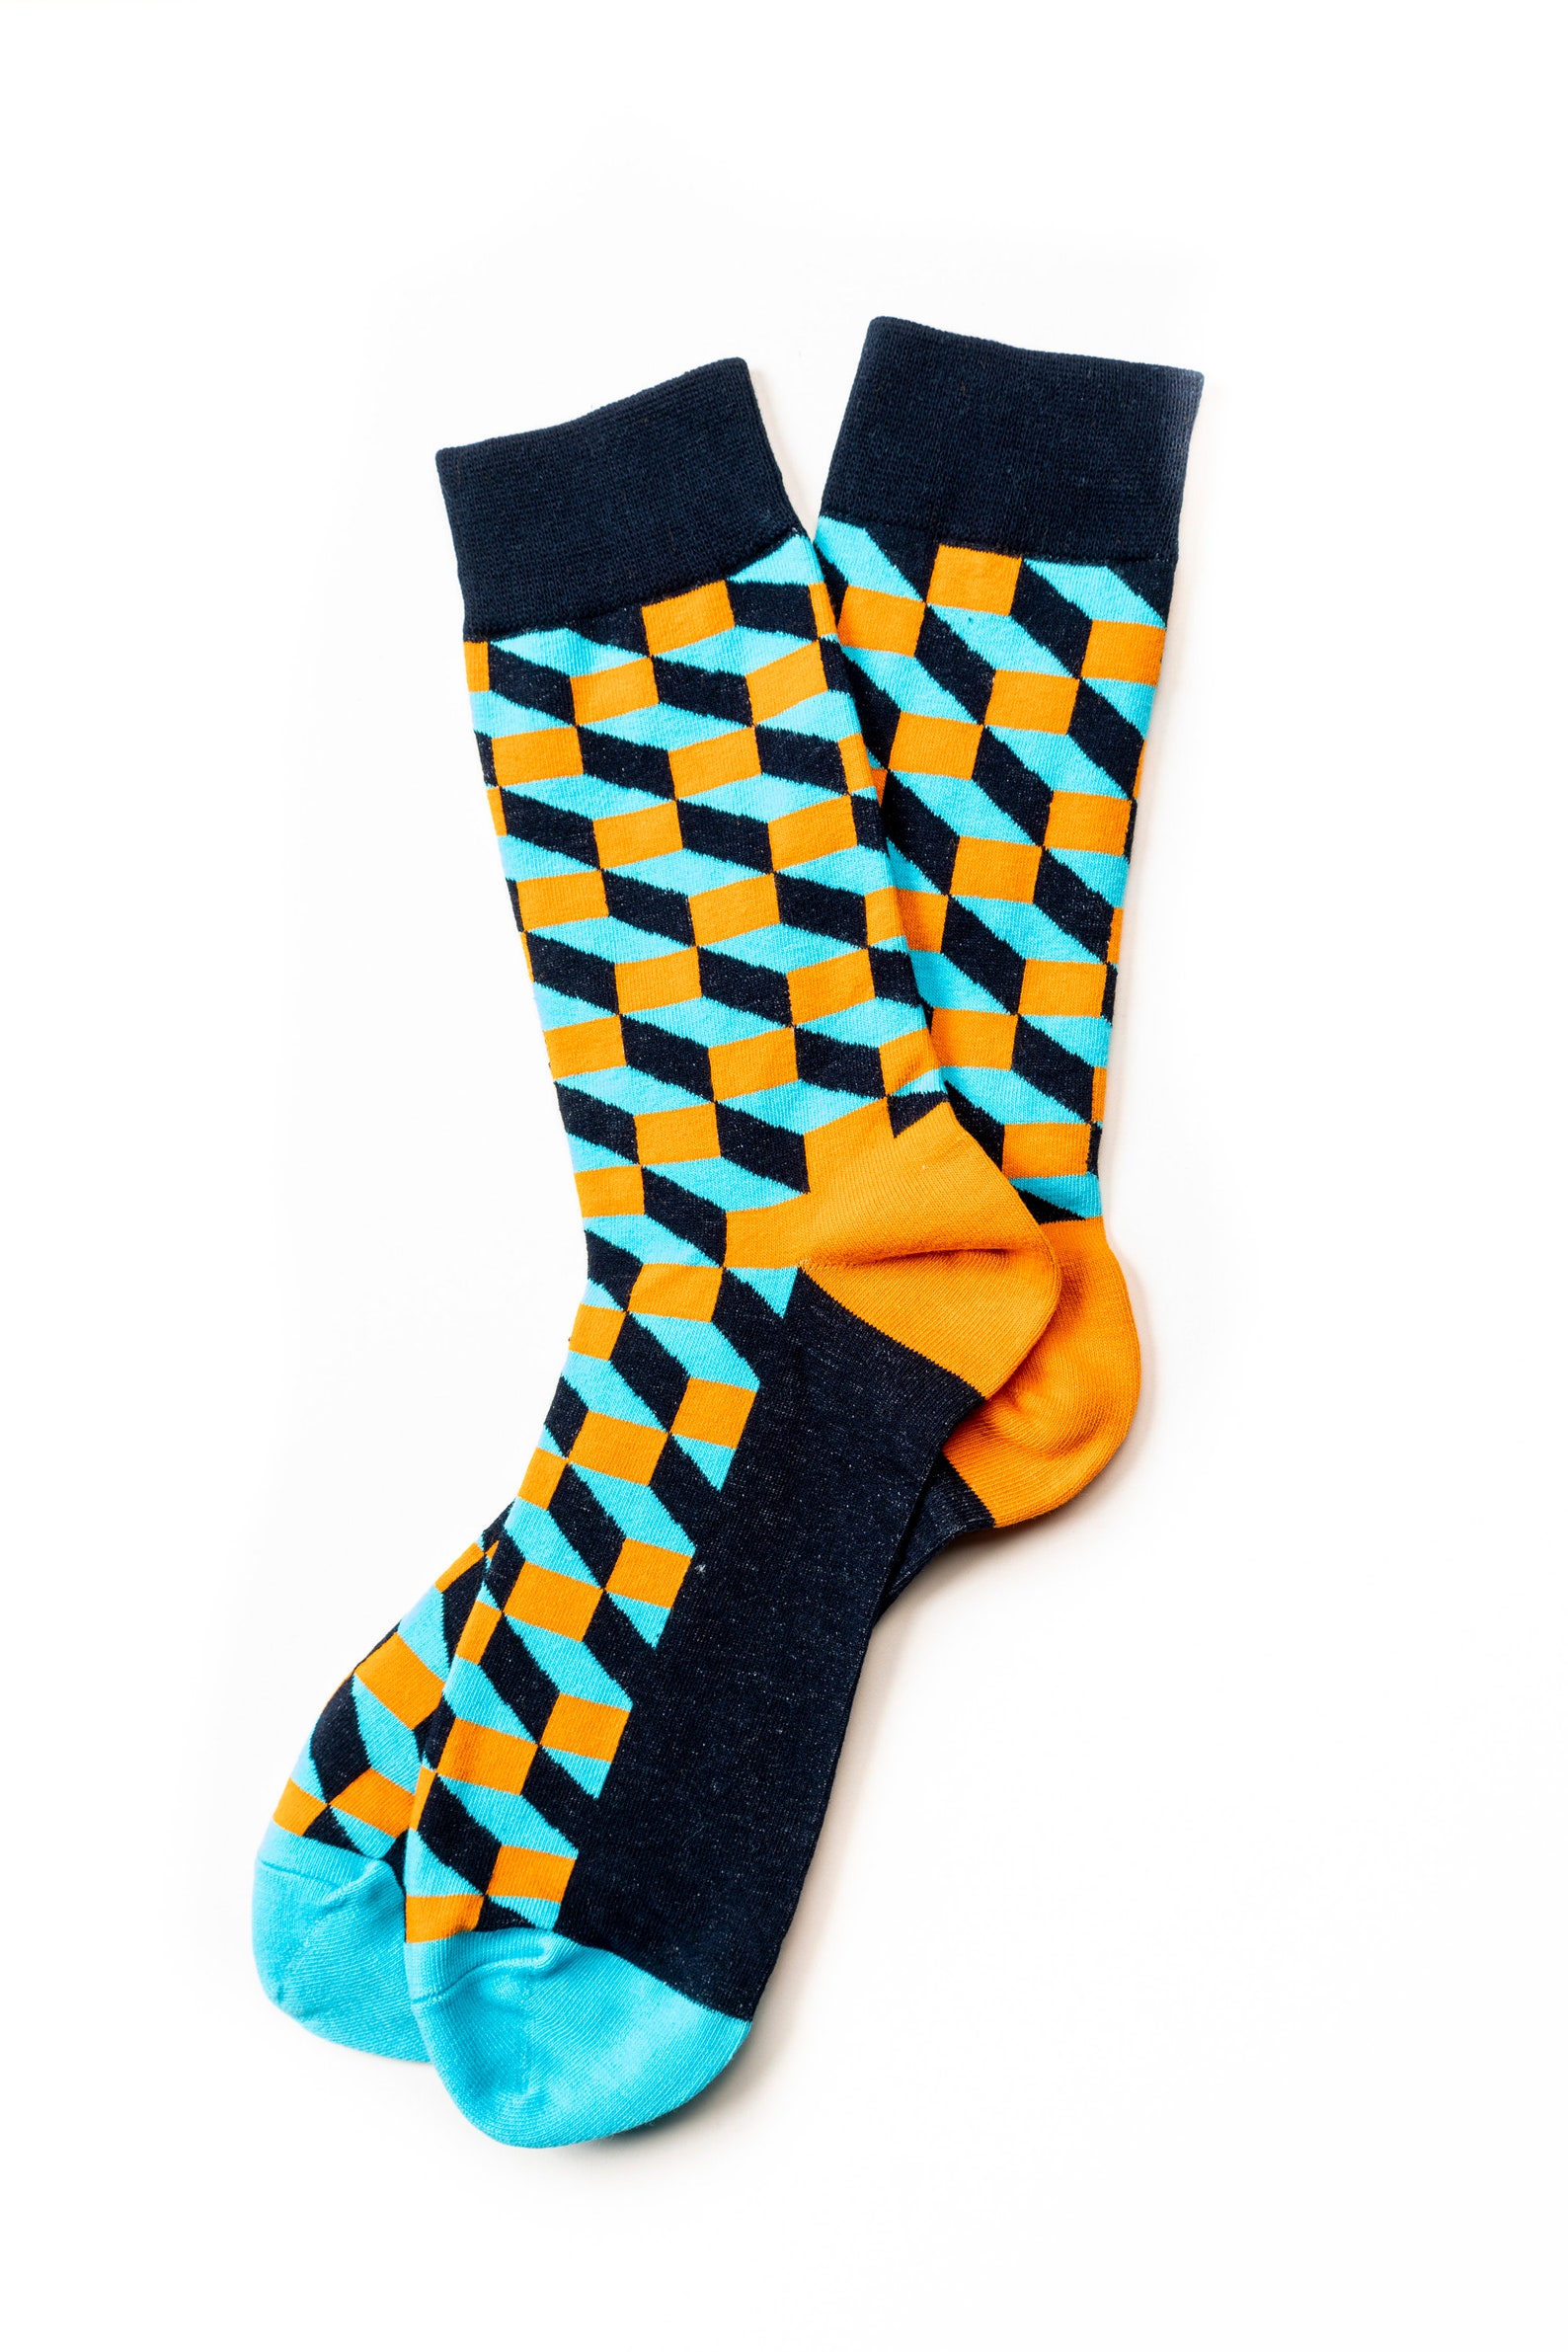 Colorful 3D visual illusion geometric socks Size 39-41 eco | Etsy